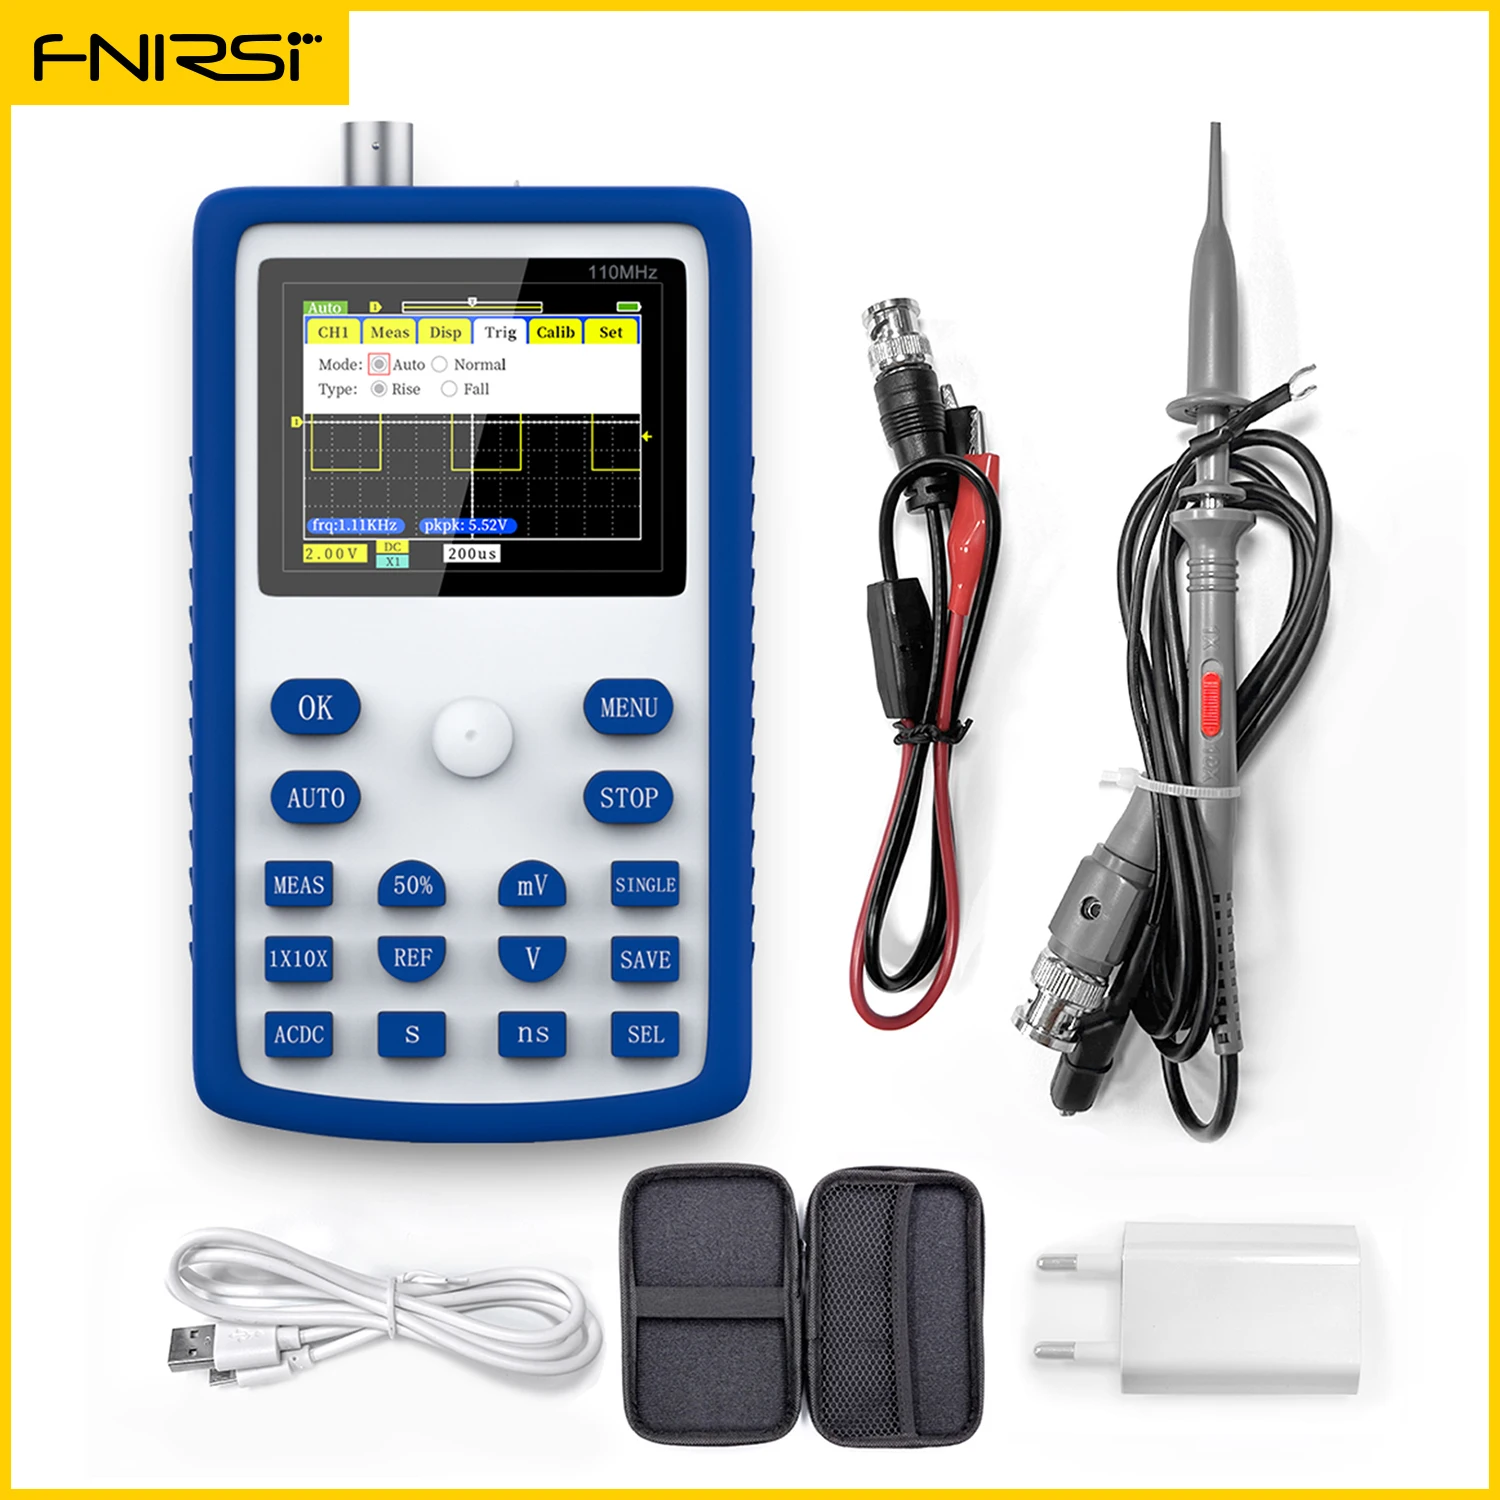 

FNIRSI-1C15 Professional Digital Oscilloscope 500MS/s Sampling Rate 110MHz Analog Bandwidth Support Waveform Storage